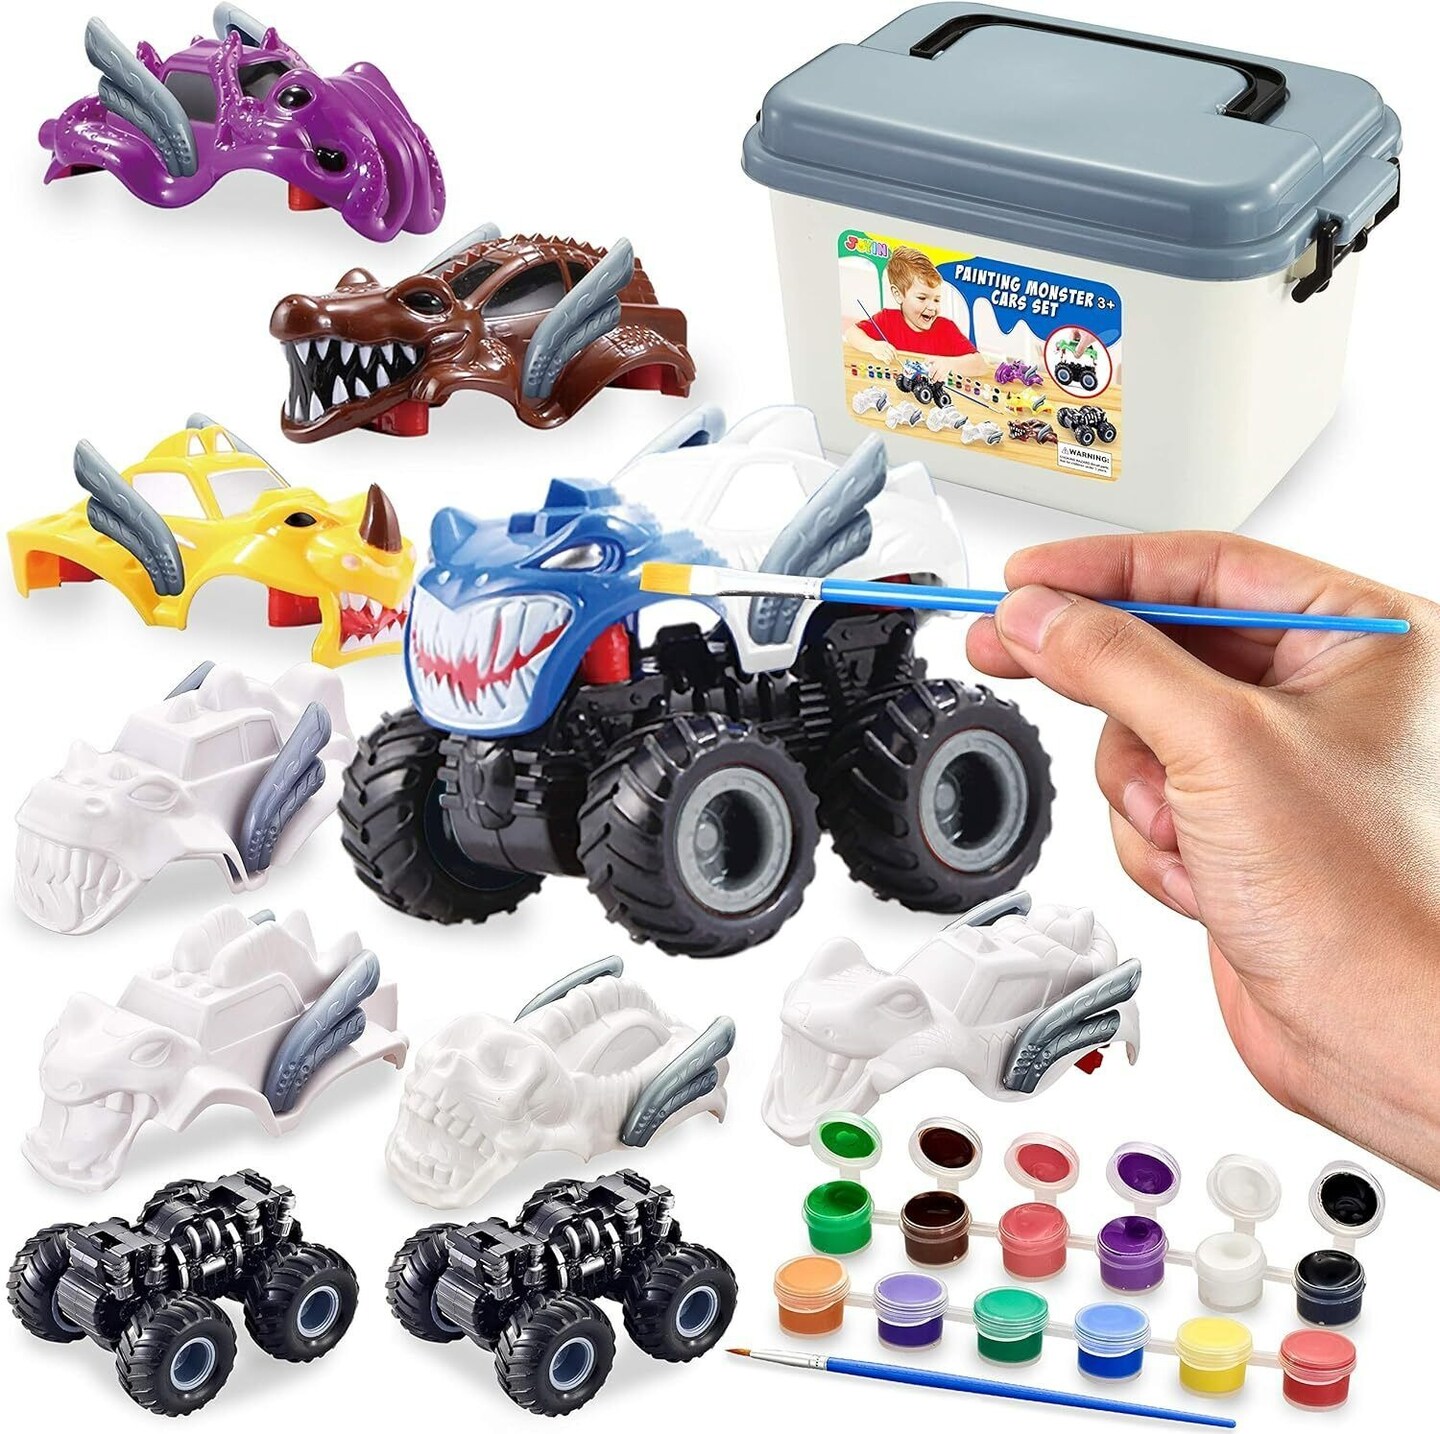 Kids Craft Kit Build &#x26; Paint Your Own Monster Car Art &#x26; Craft Kit DIY Toy